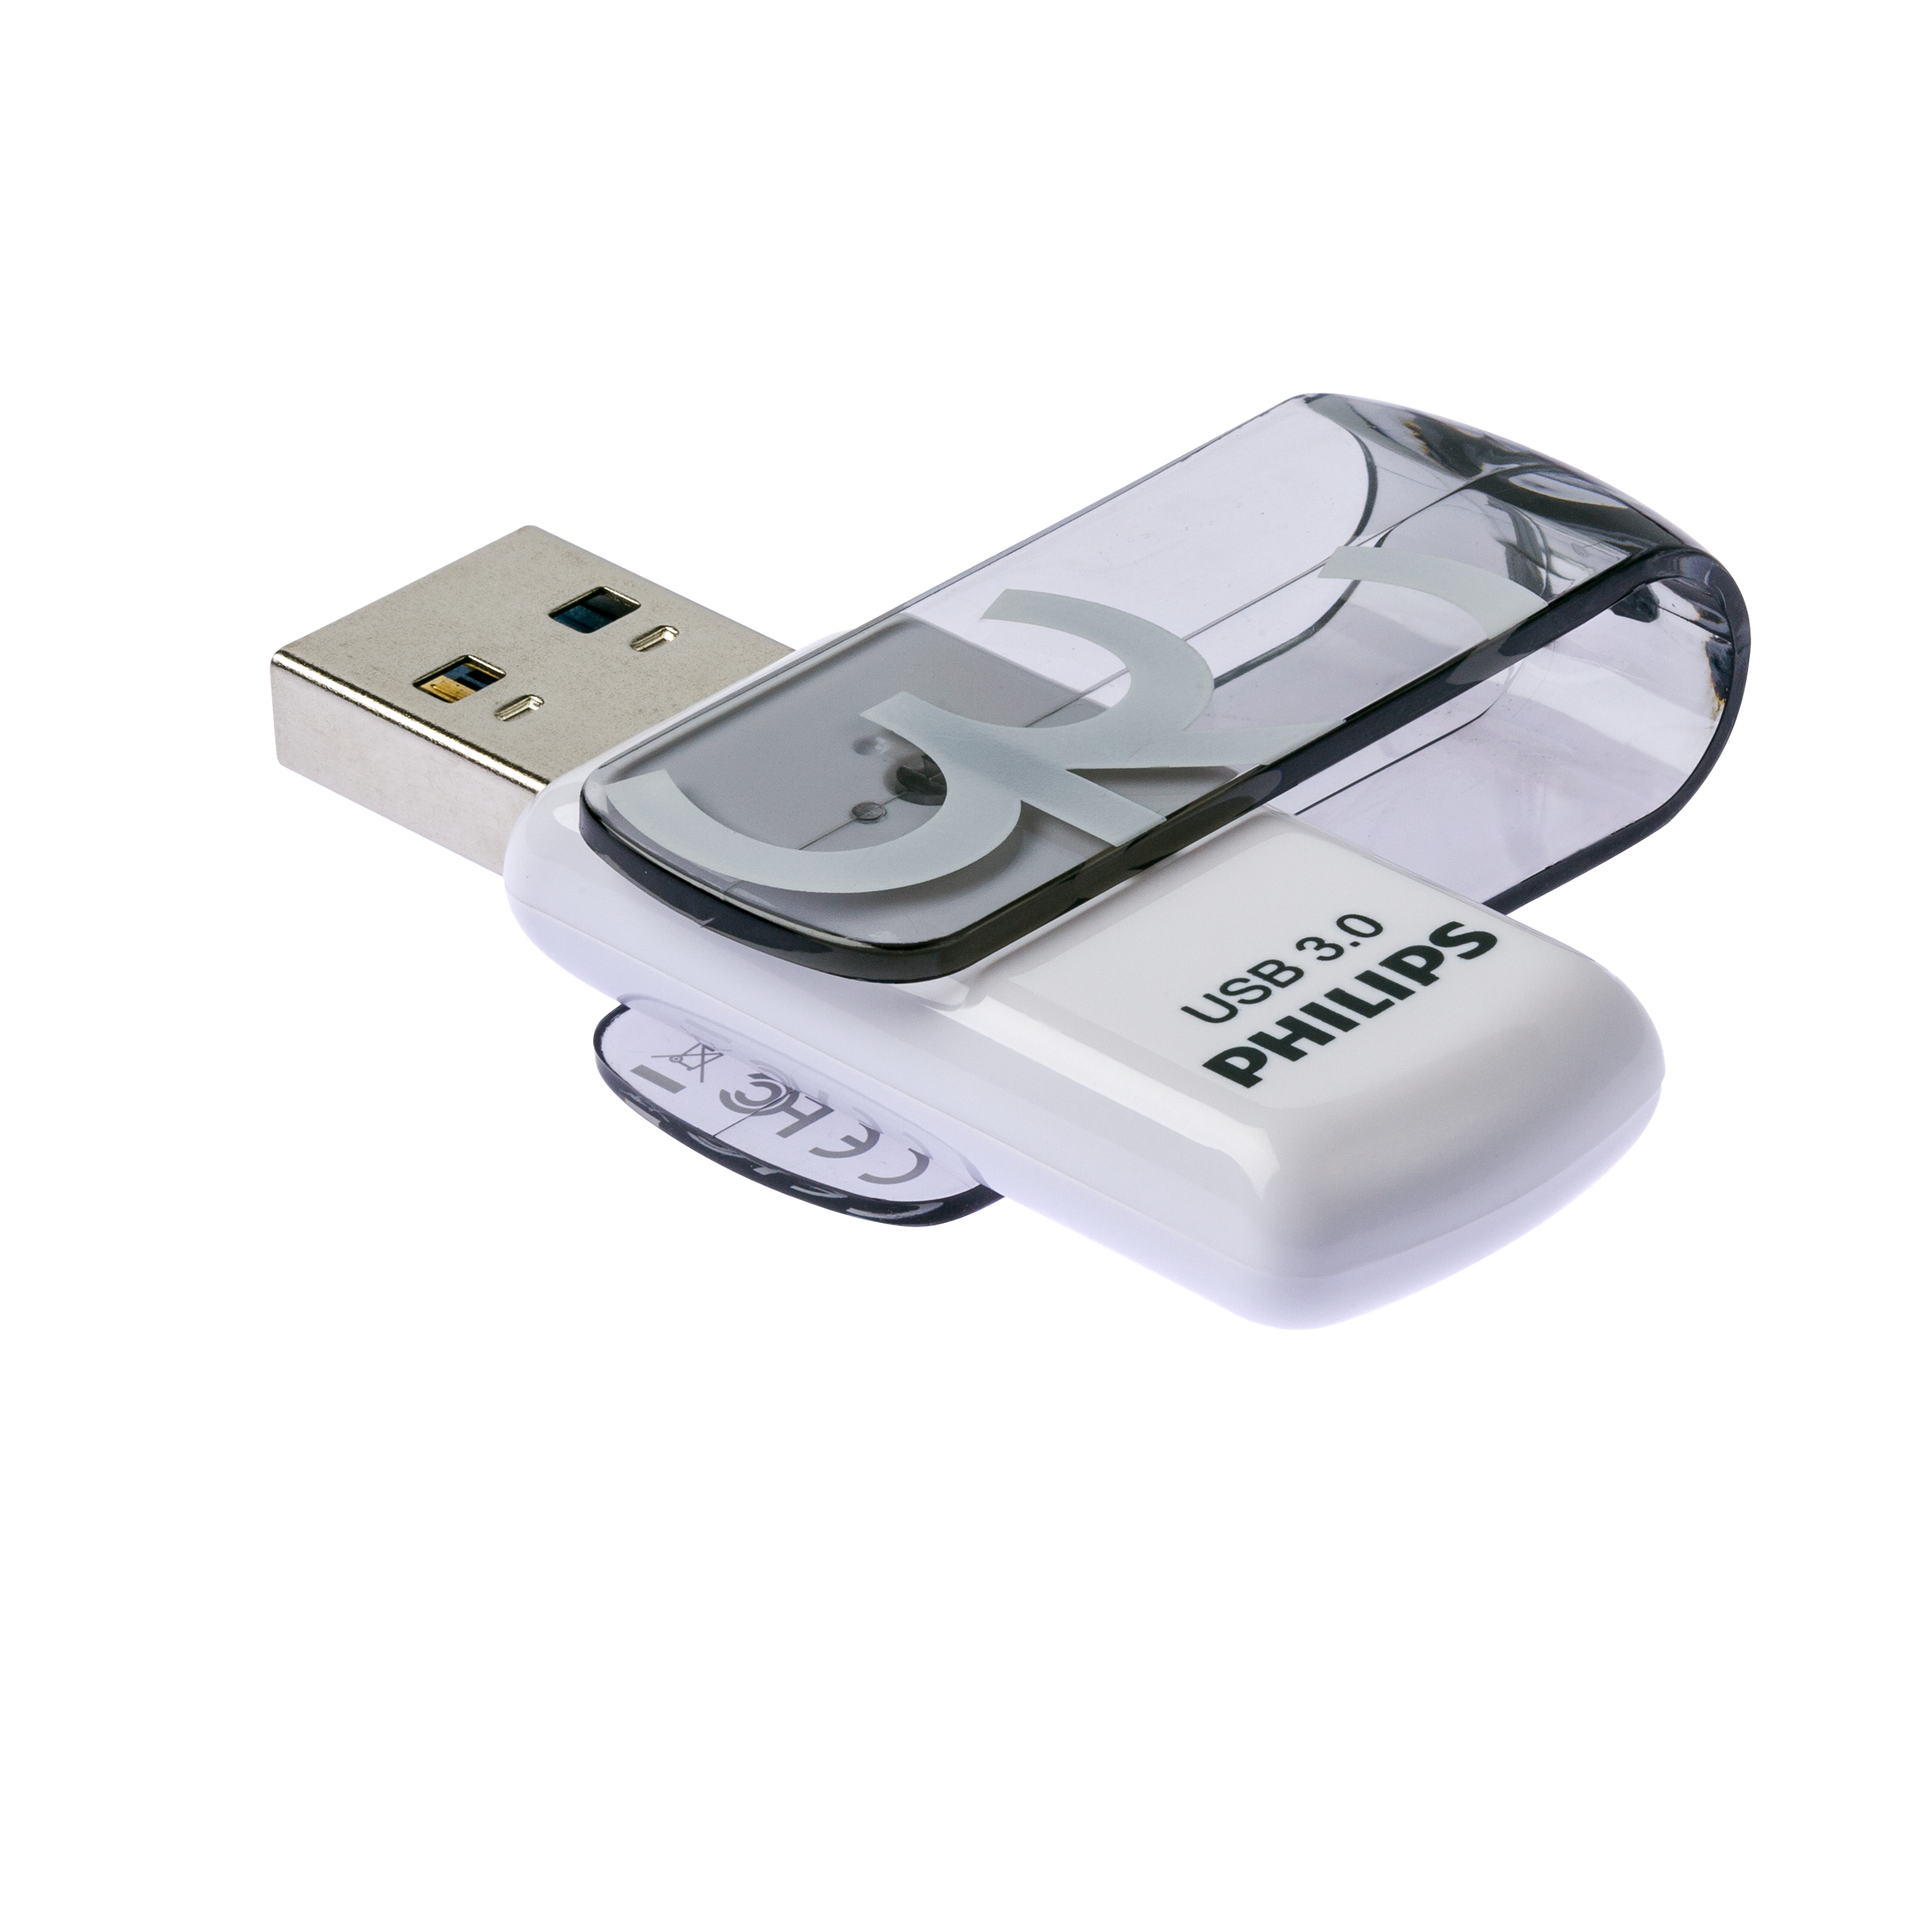 100 Vivid GB) (Weiß, PHILIPS Grey®, MB/s Edition USB-Stick 32 Shadow